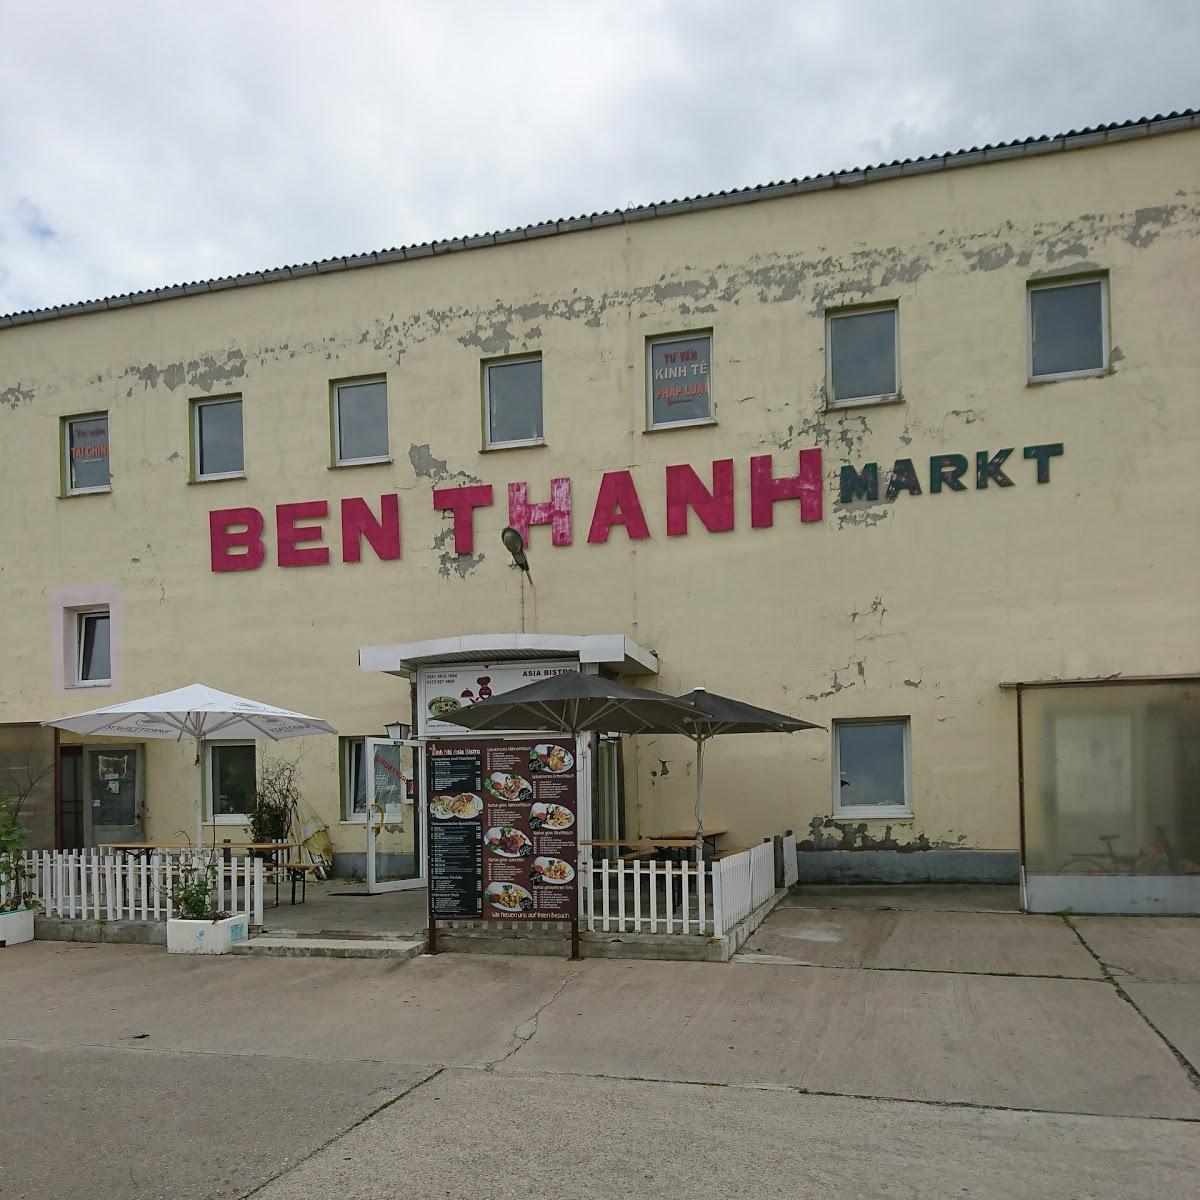 Restaurant "Benthanh Markt GmbH Großhandel" in Leipzig